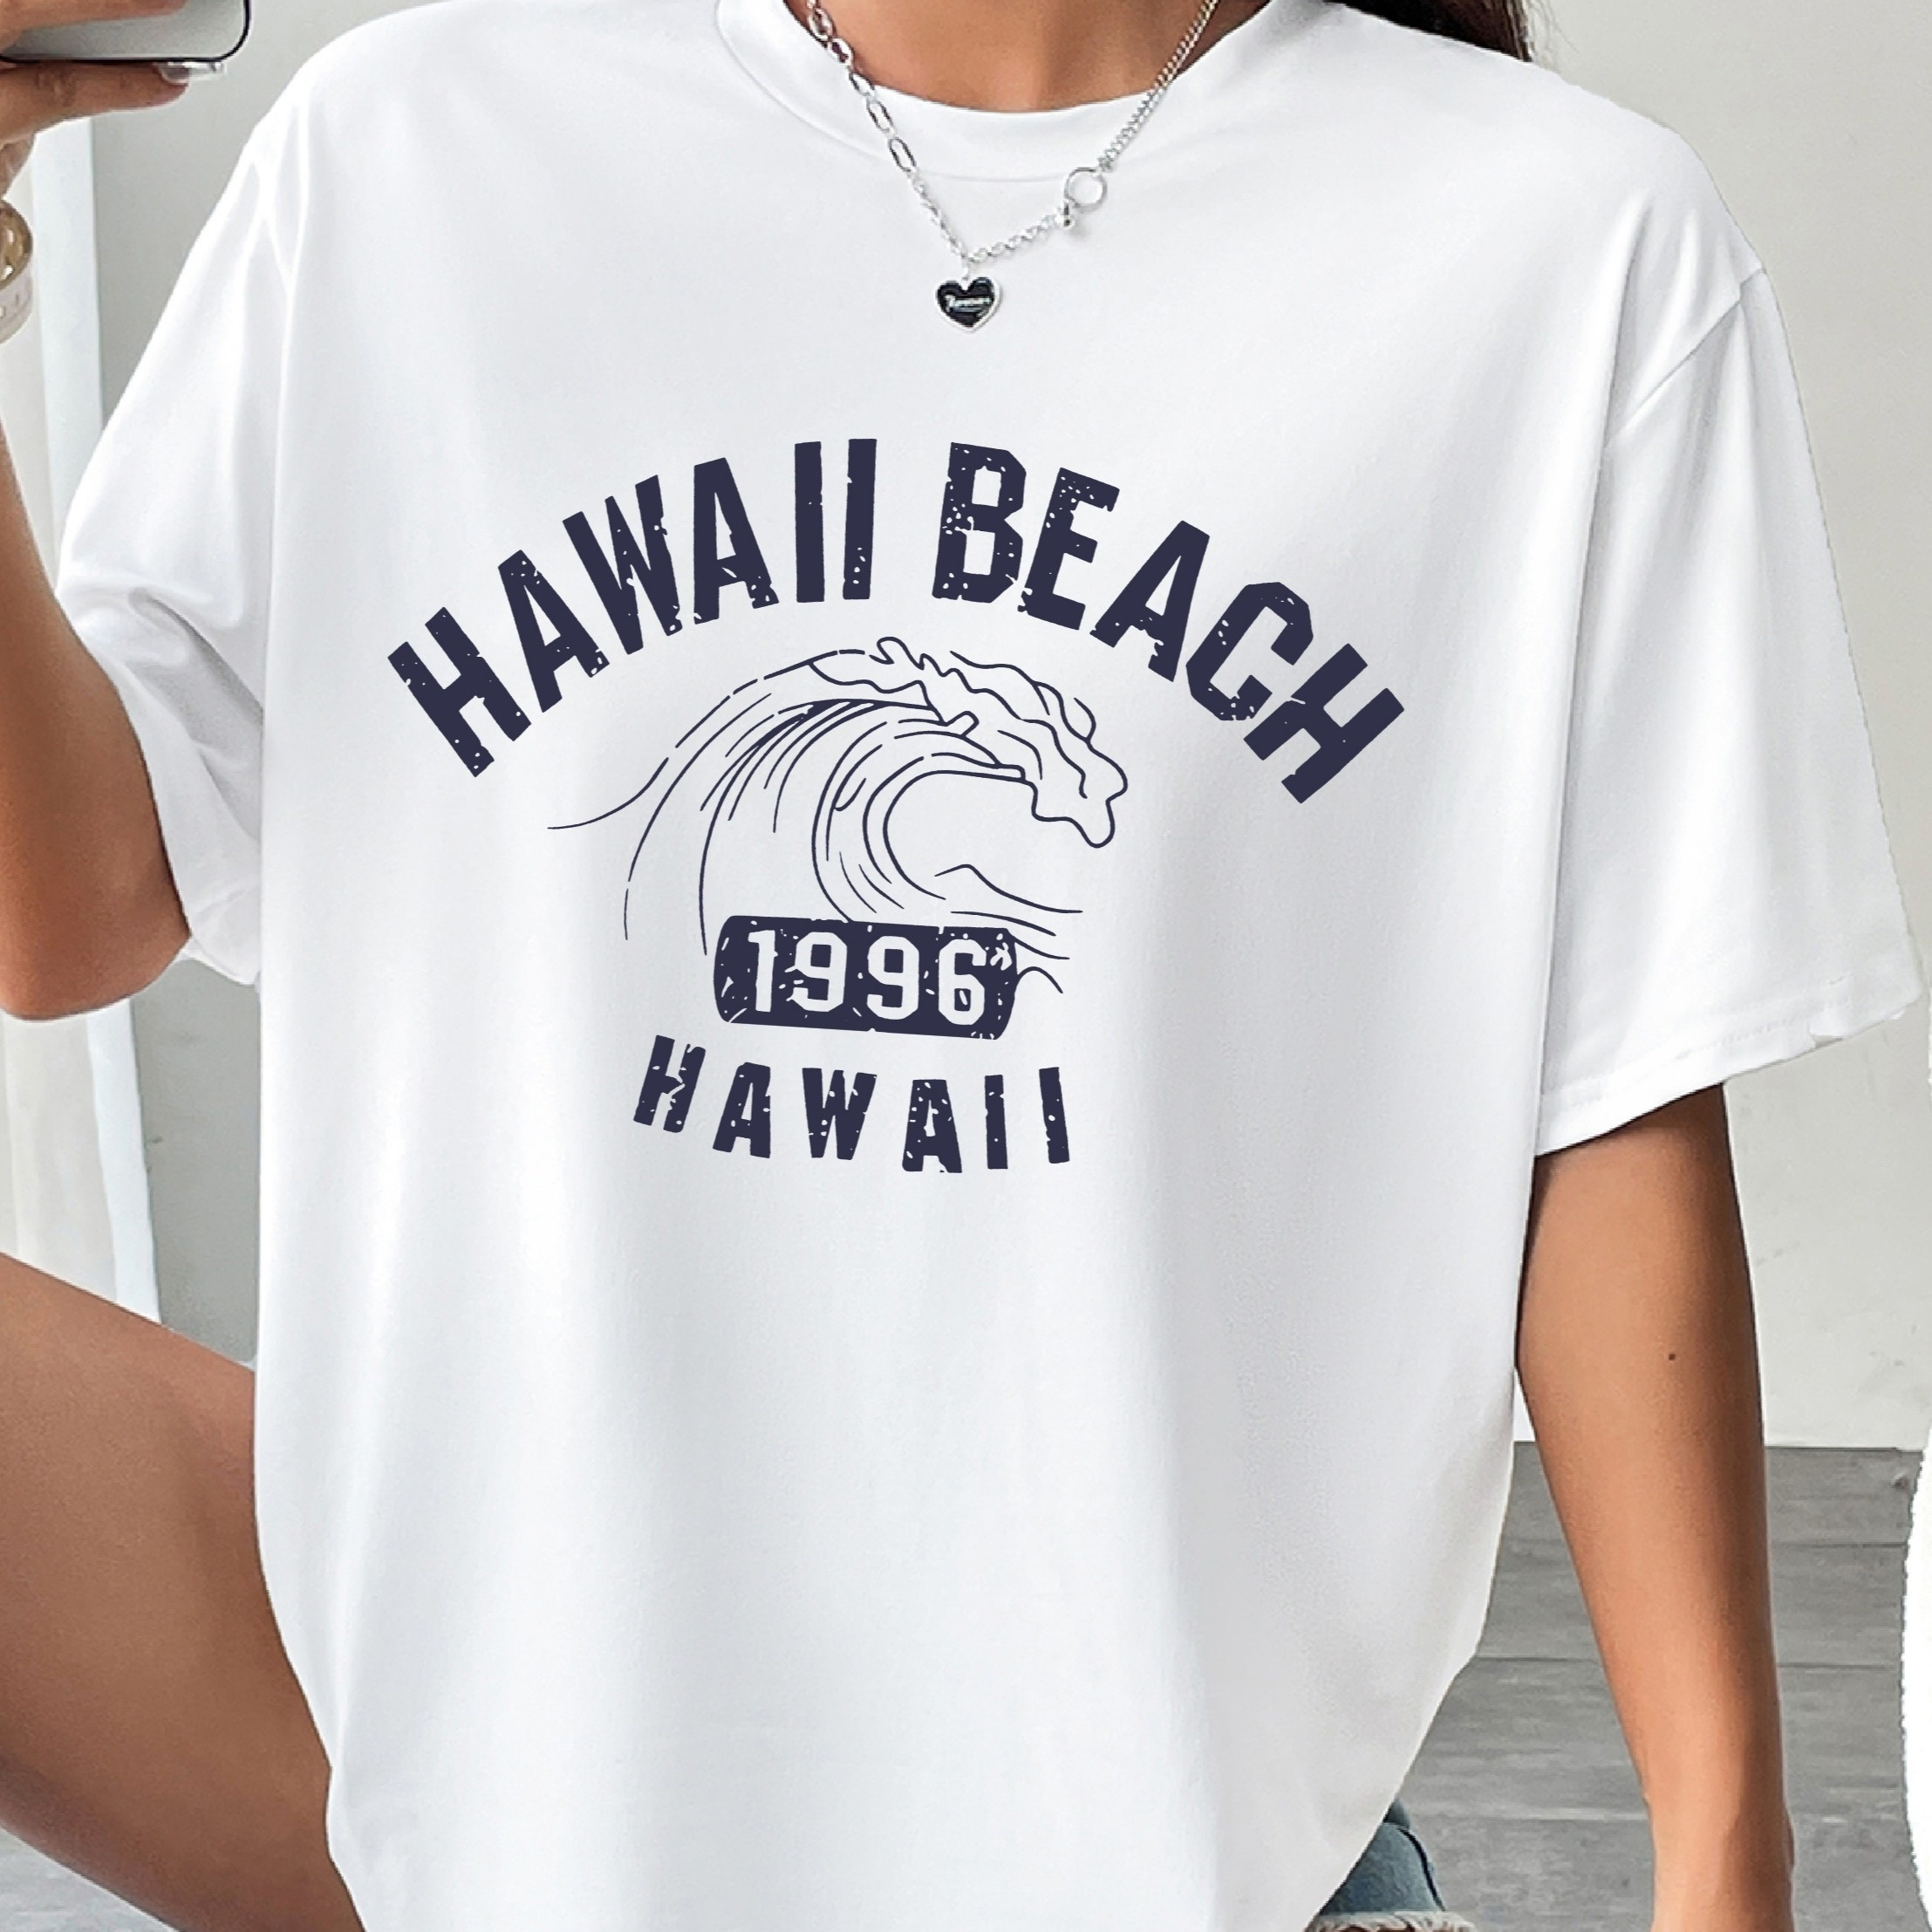 

Hawaii Beach Print Drop Shoulder T-shirt, Short Sleeve Crew Neck Casual Top For Spring & Summer, Women's Clothing